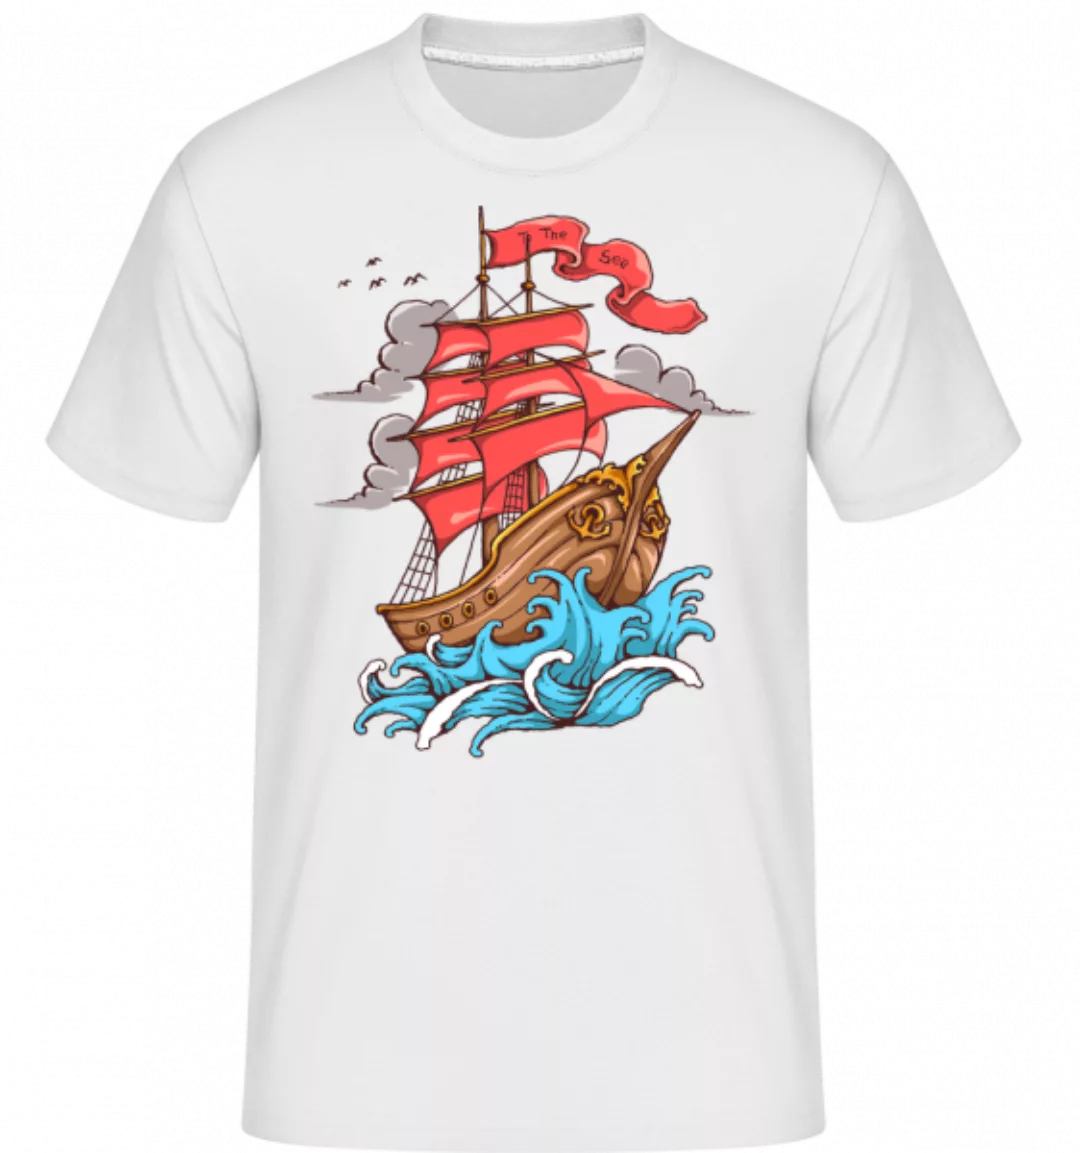 Ship Sail To The Sea · Shirtinator Männer T-Shirt günstig online kaufen